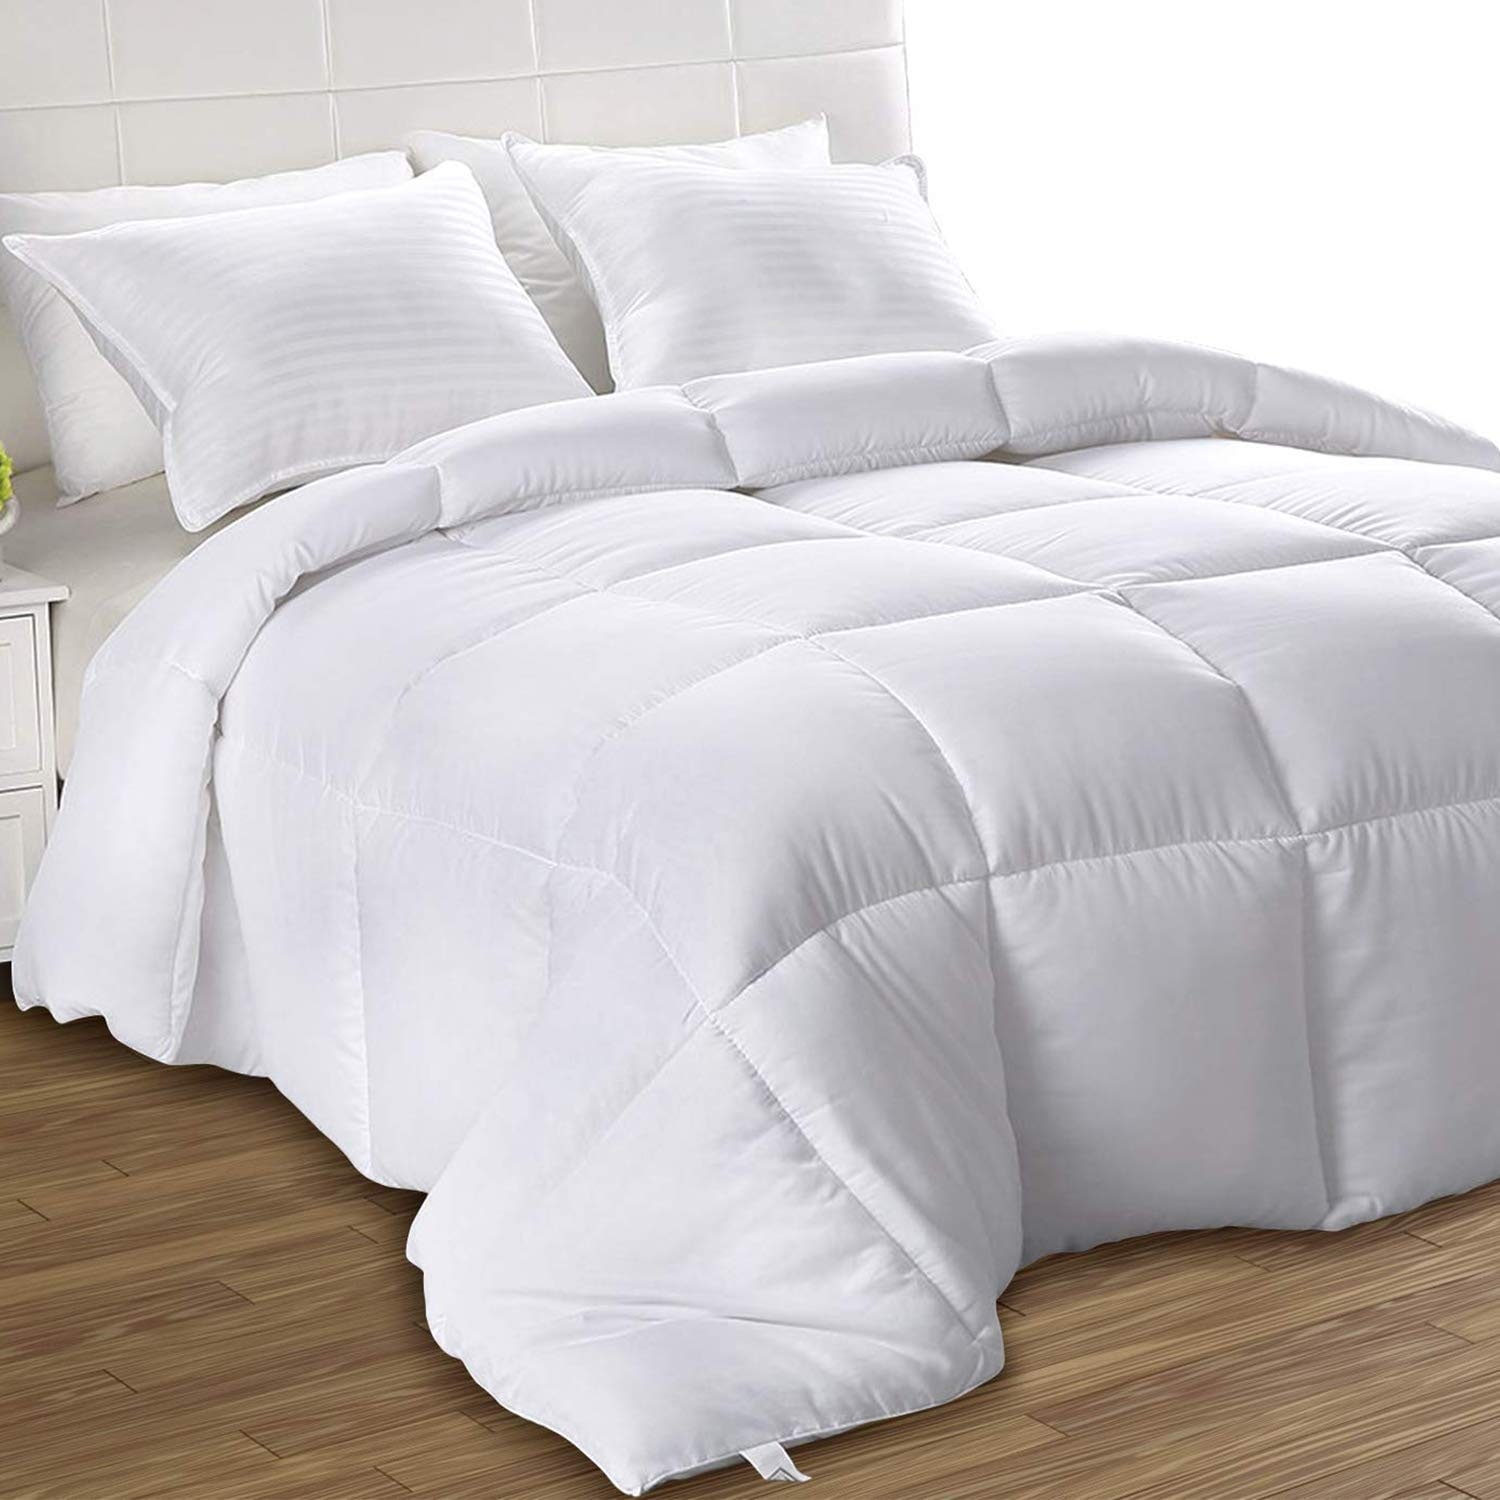  Utopia Bedding Comforter - All Season Comforters Queen Size -  Plush Siliconized Fiberfill - White Bed Comforter - Box Stitched : Home &  Kitchen